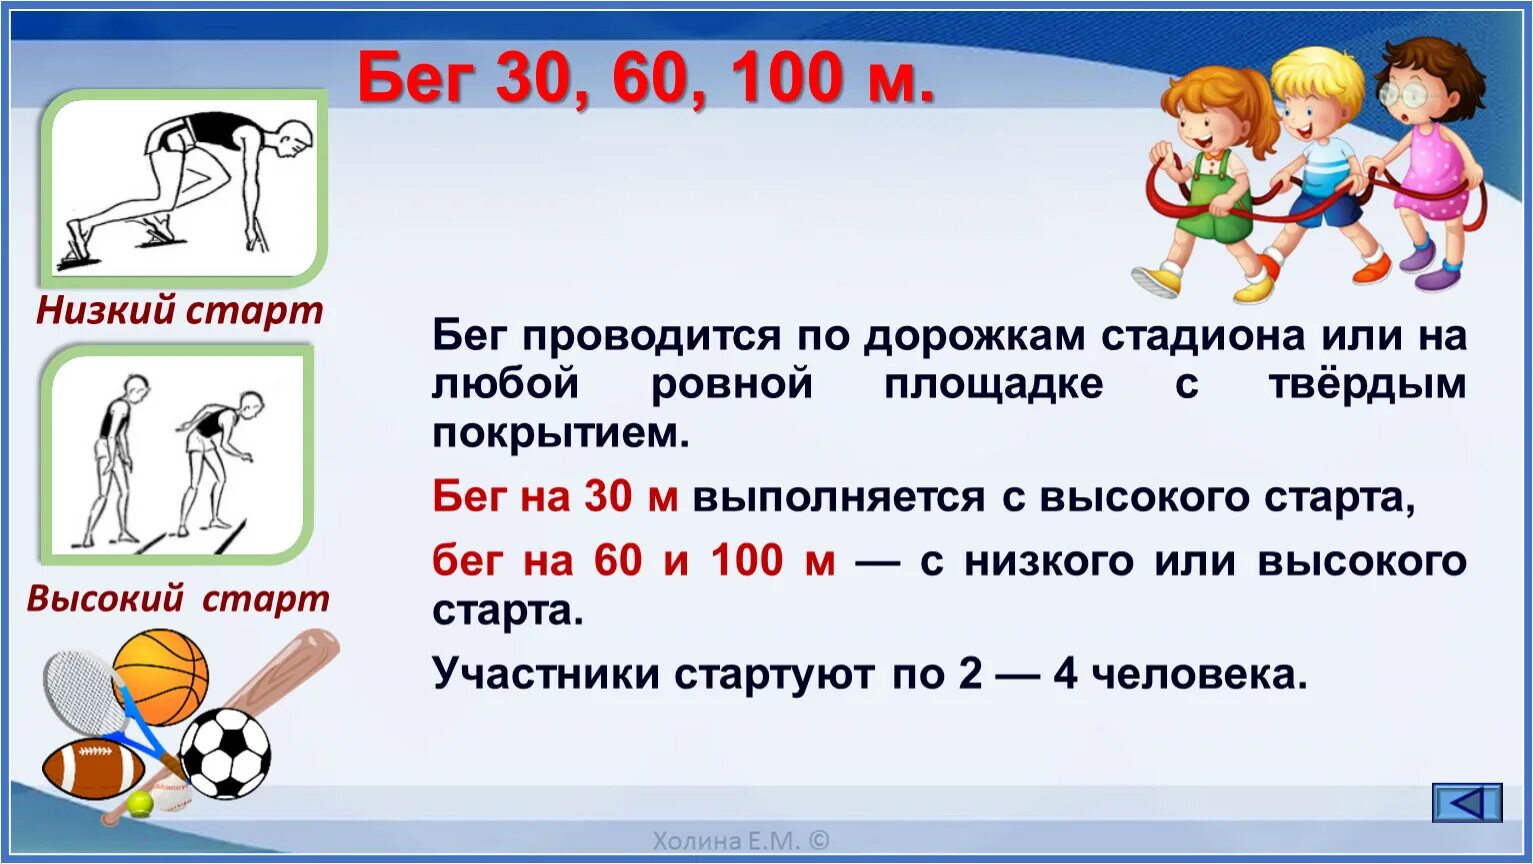 Техника бега на 1 км. Тест бег 30 метров 2 класс. Сообщение бег 30 метров. Бег на 30 60 100 метров. Техника бега на дистанцию 30 метров.